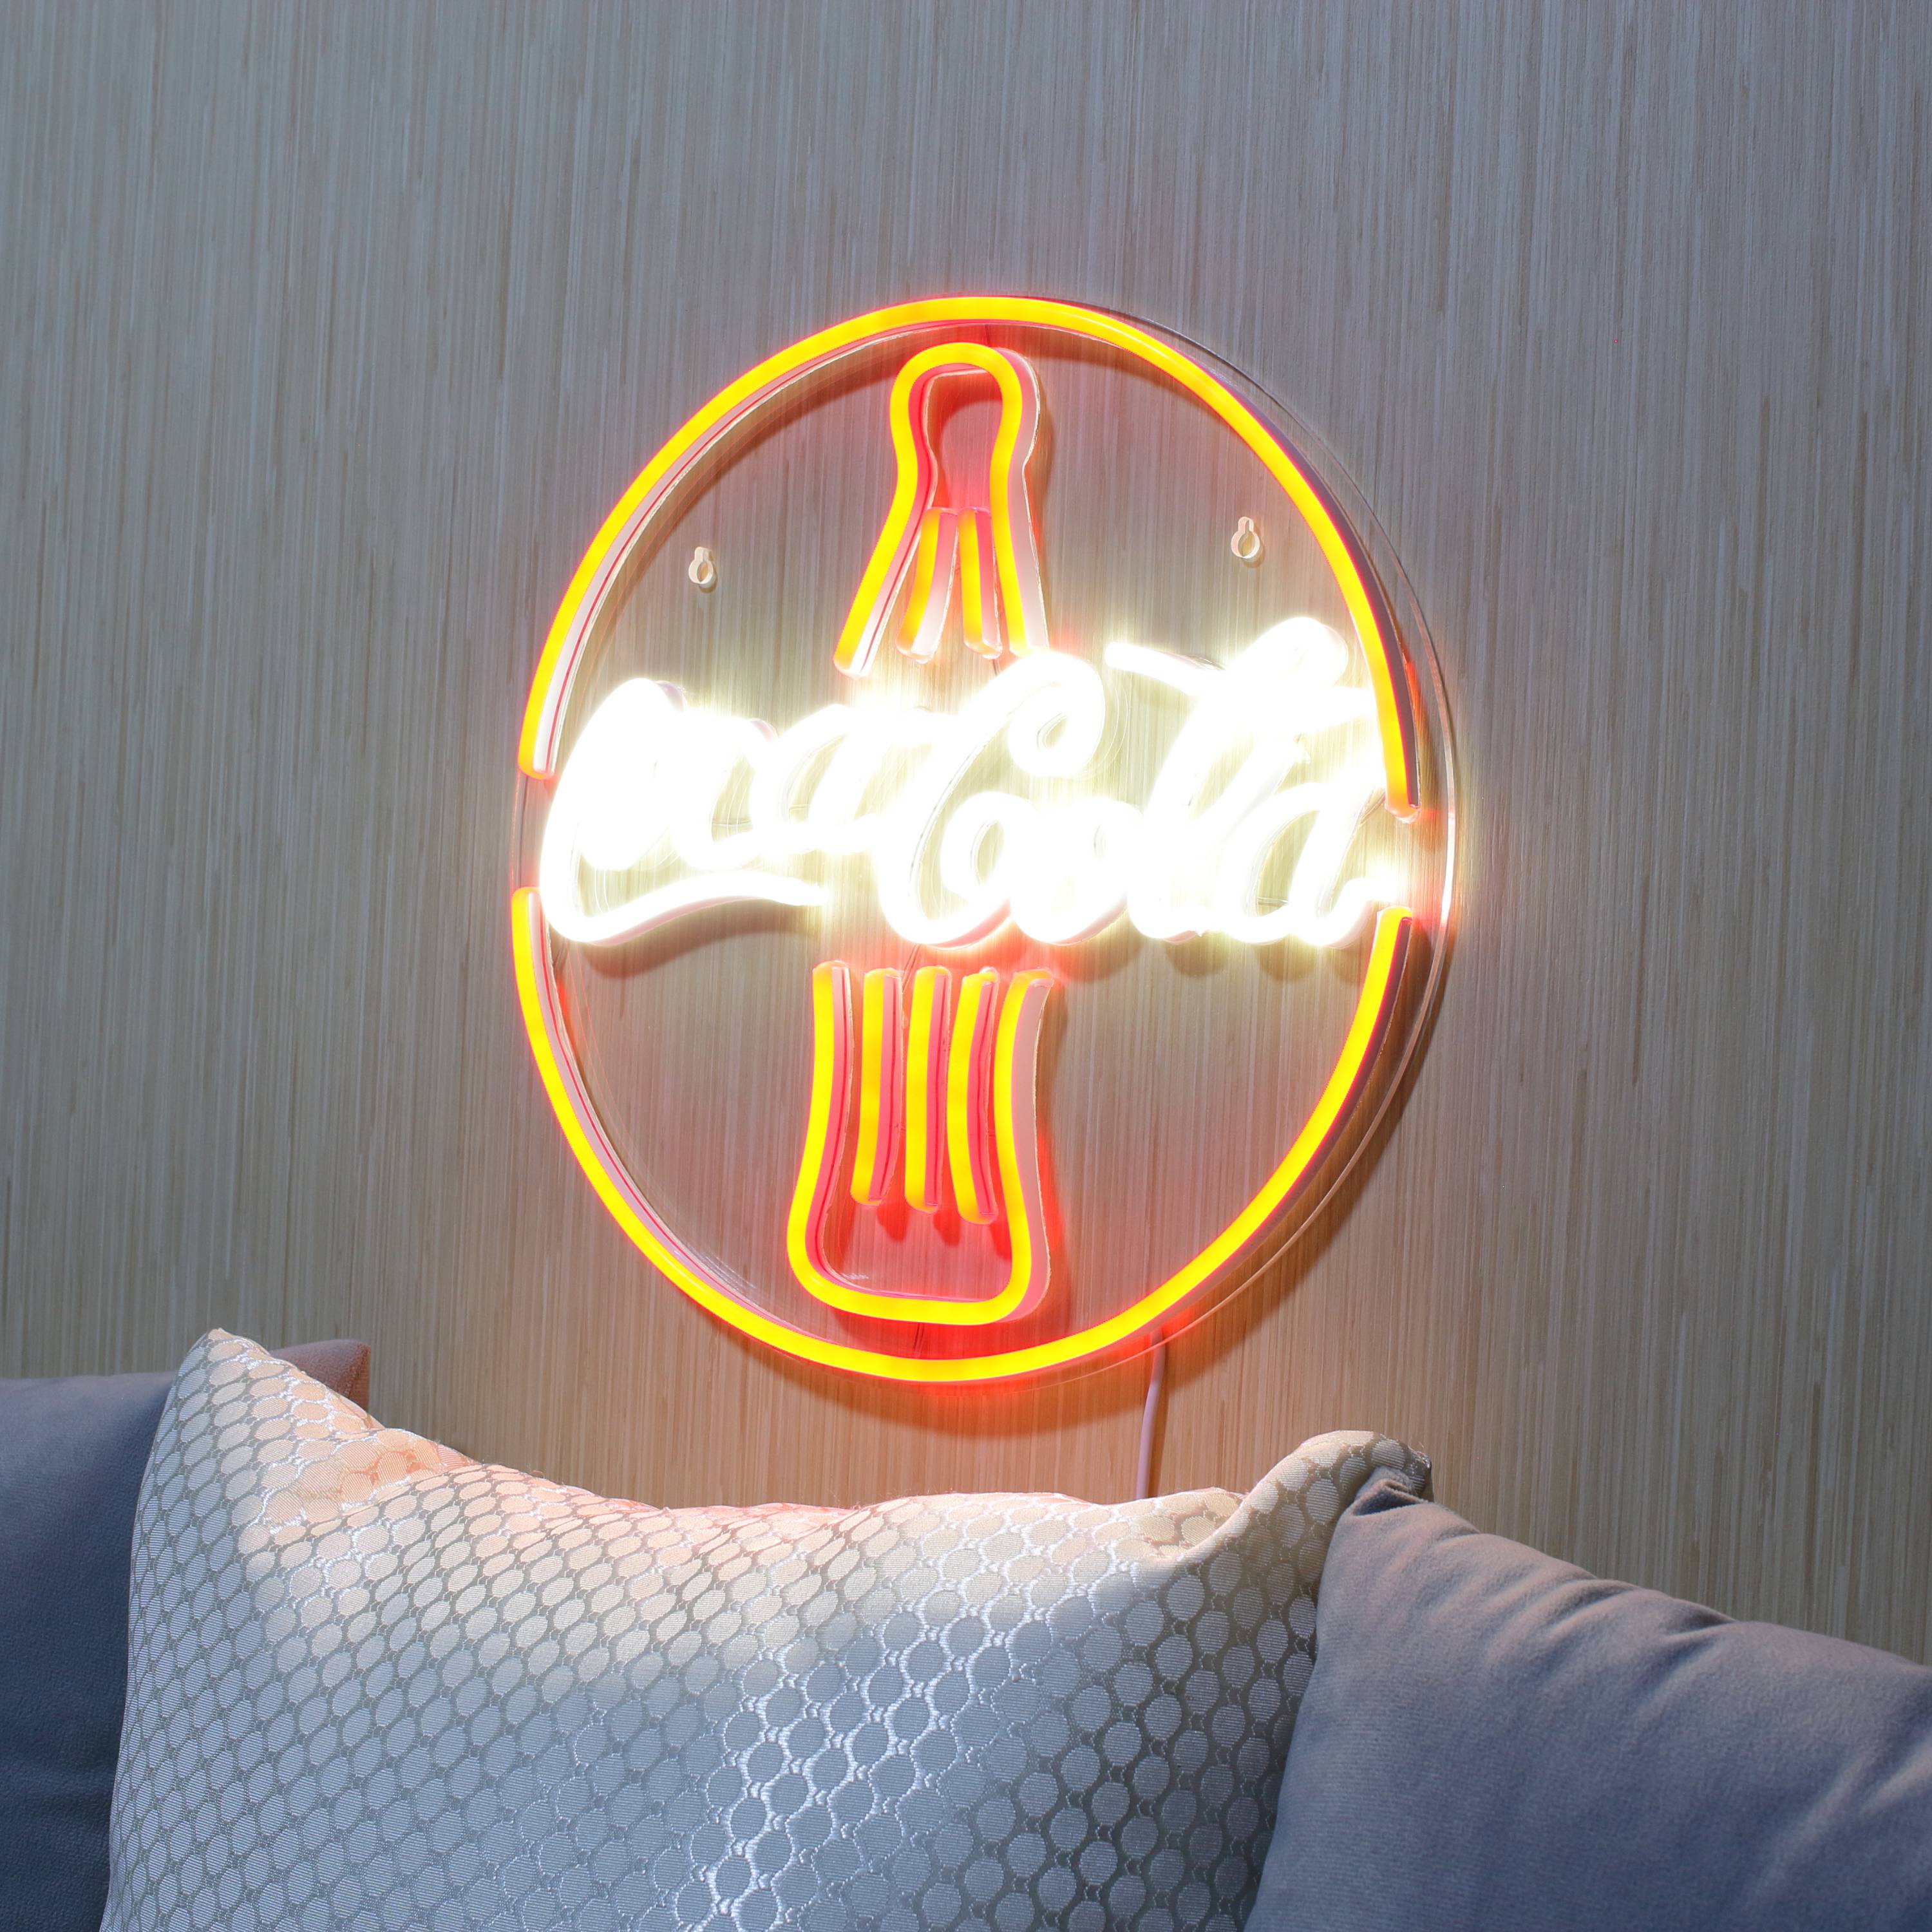 Coca-cola Large Flex Neon LED Sign